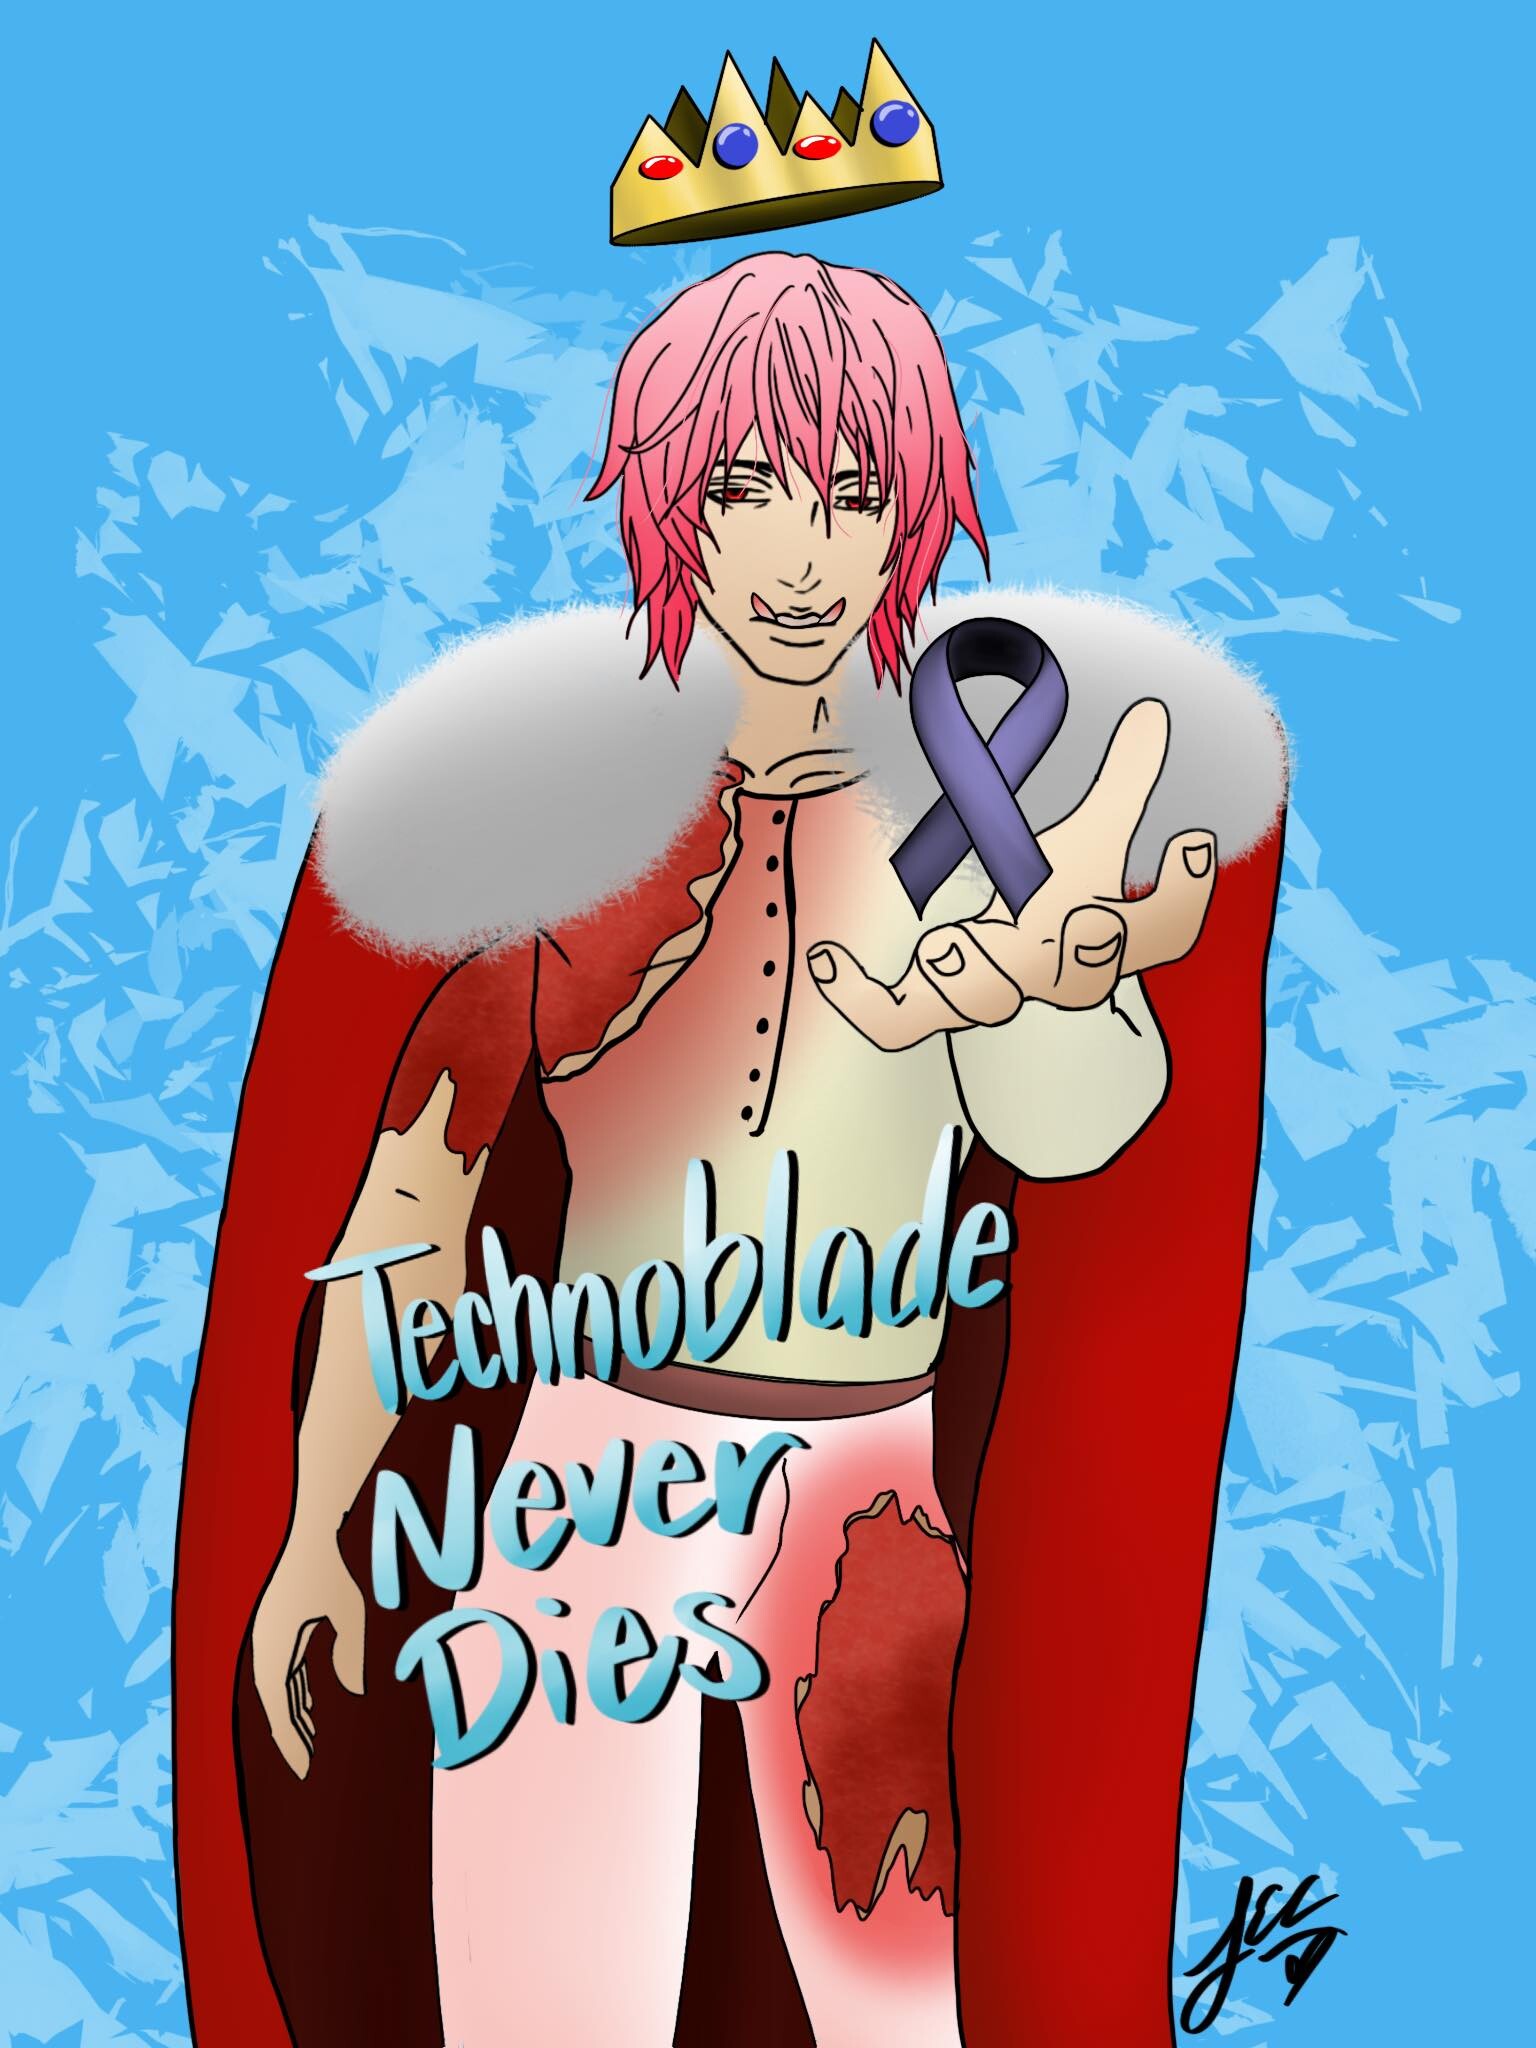 TECHNOBLADE NEVER DIES!!! by Cure-EdMatt on DeviantArt